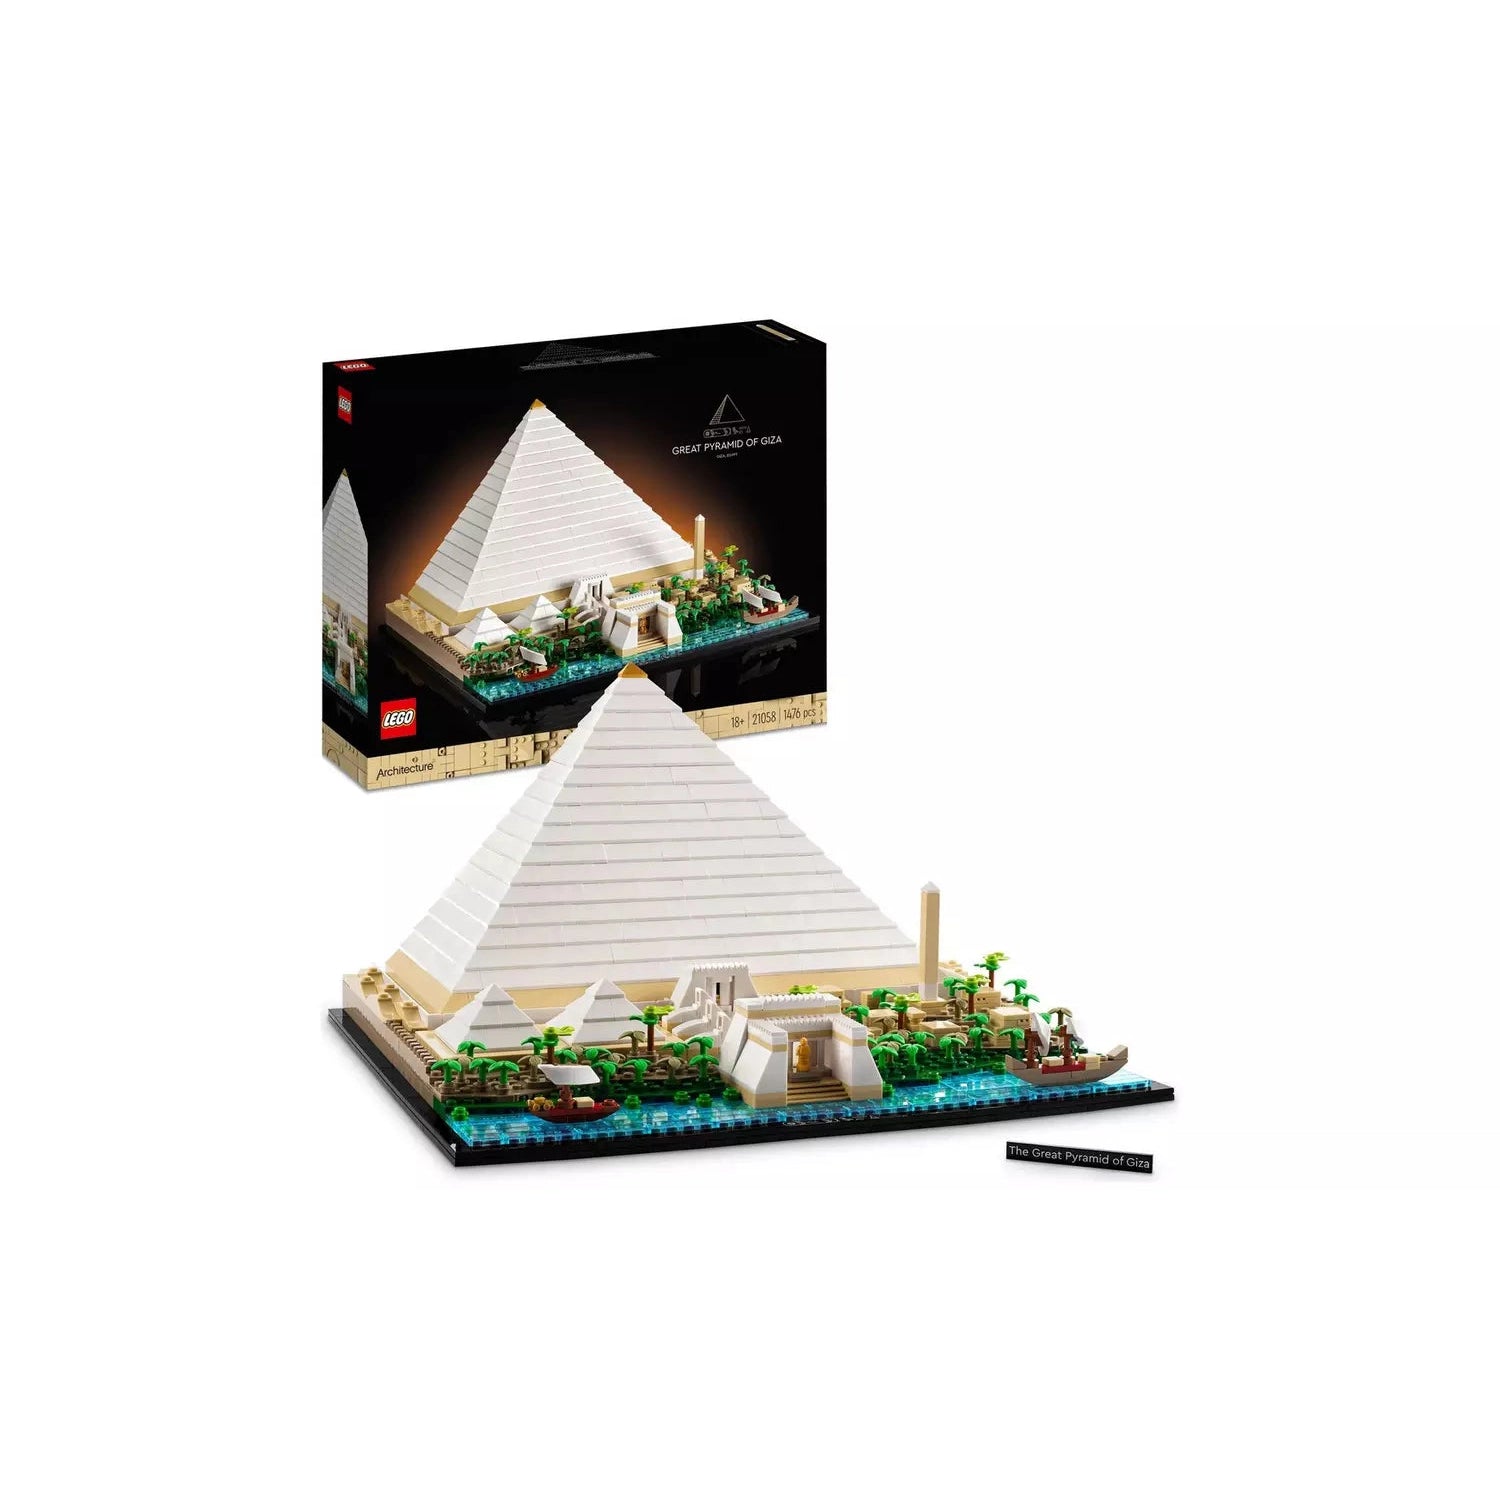 Lego 21058 Great Pyramid of Giza